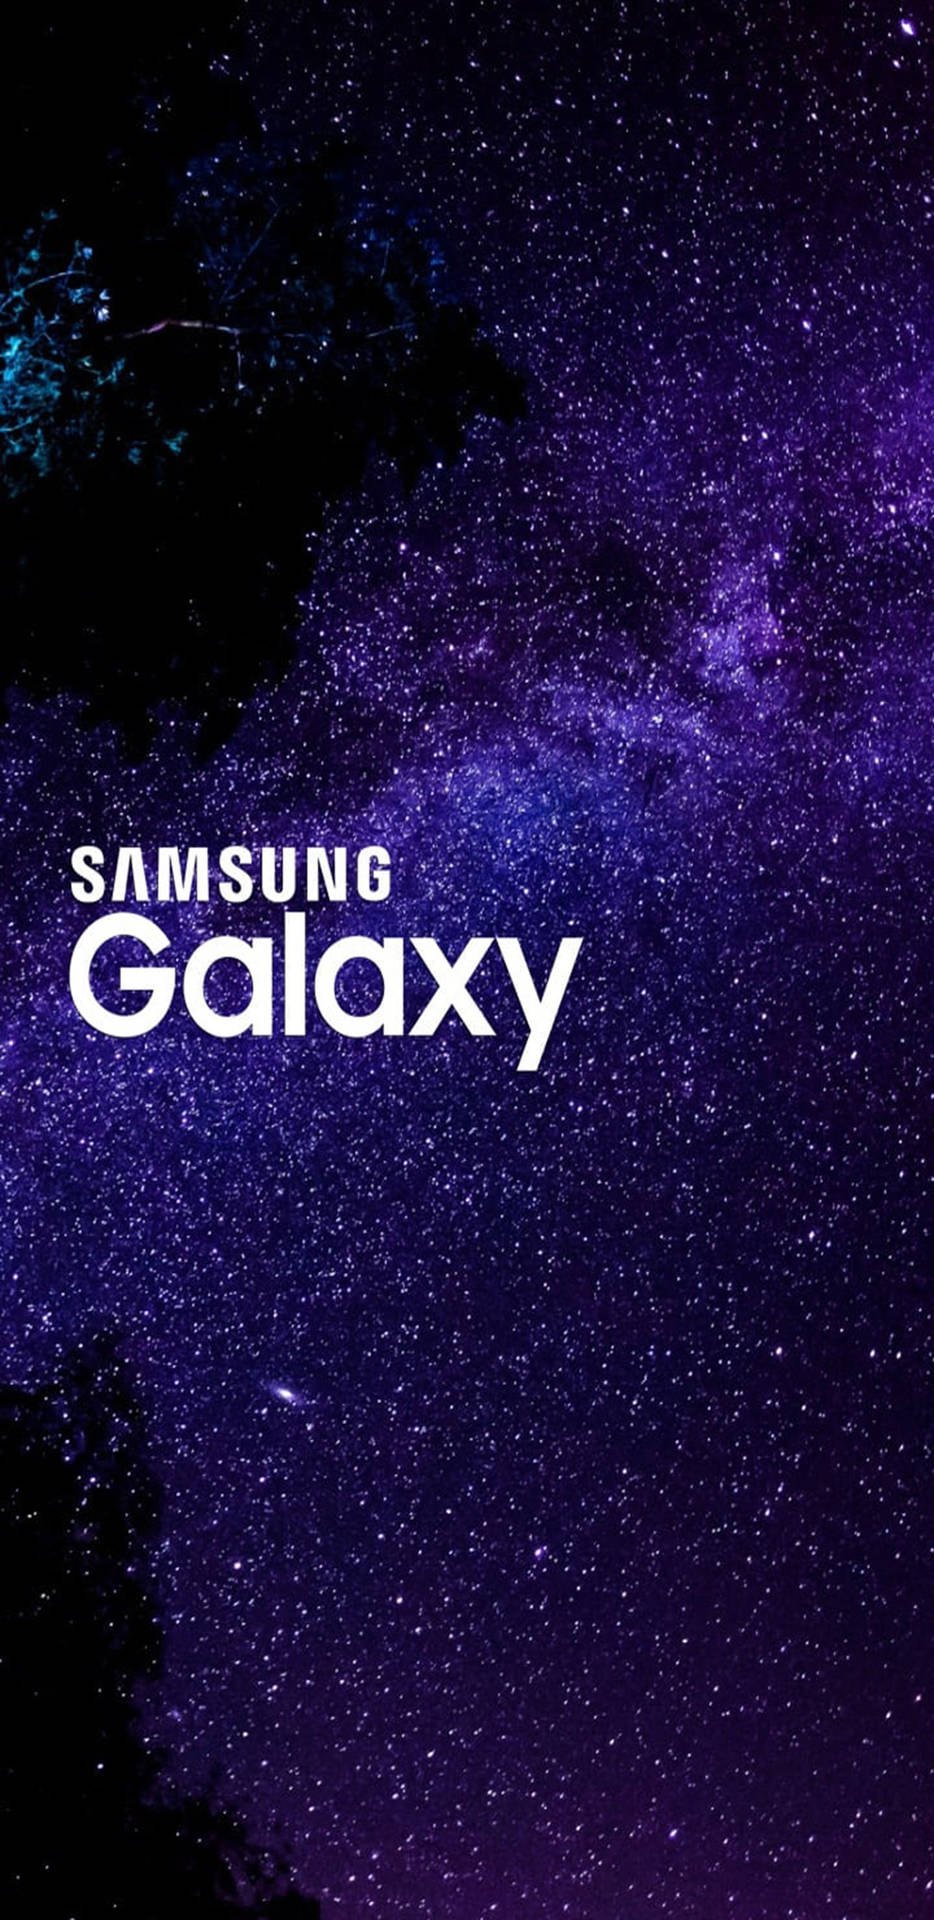 Immagini Samsung Galaxy